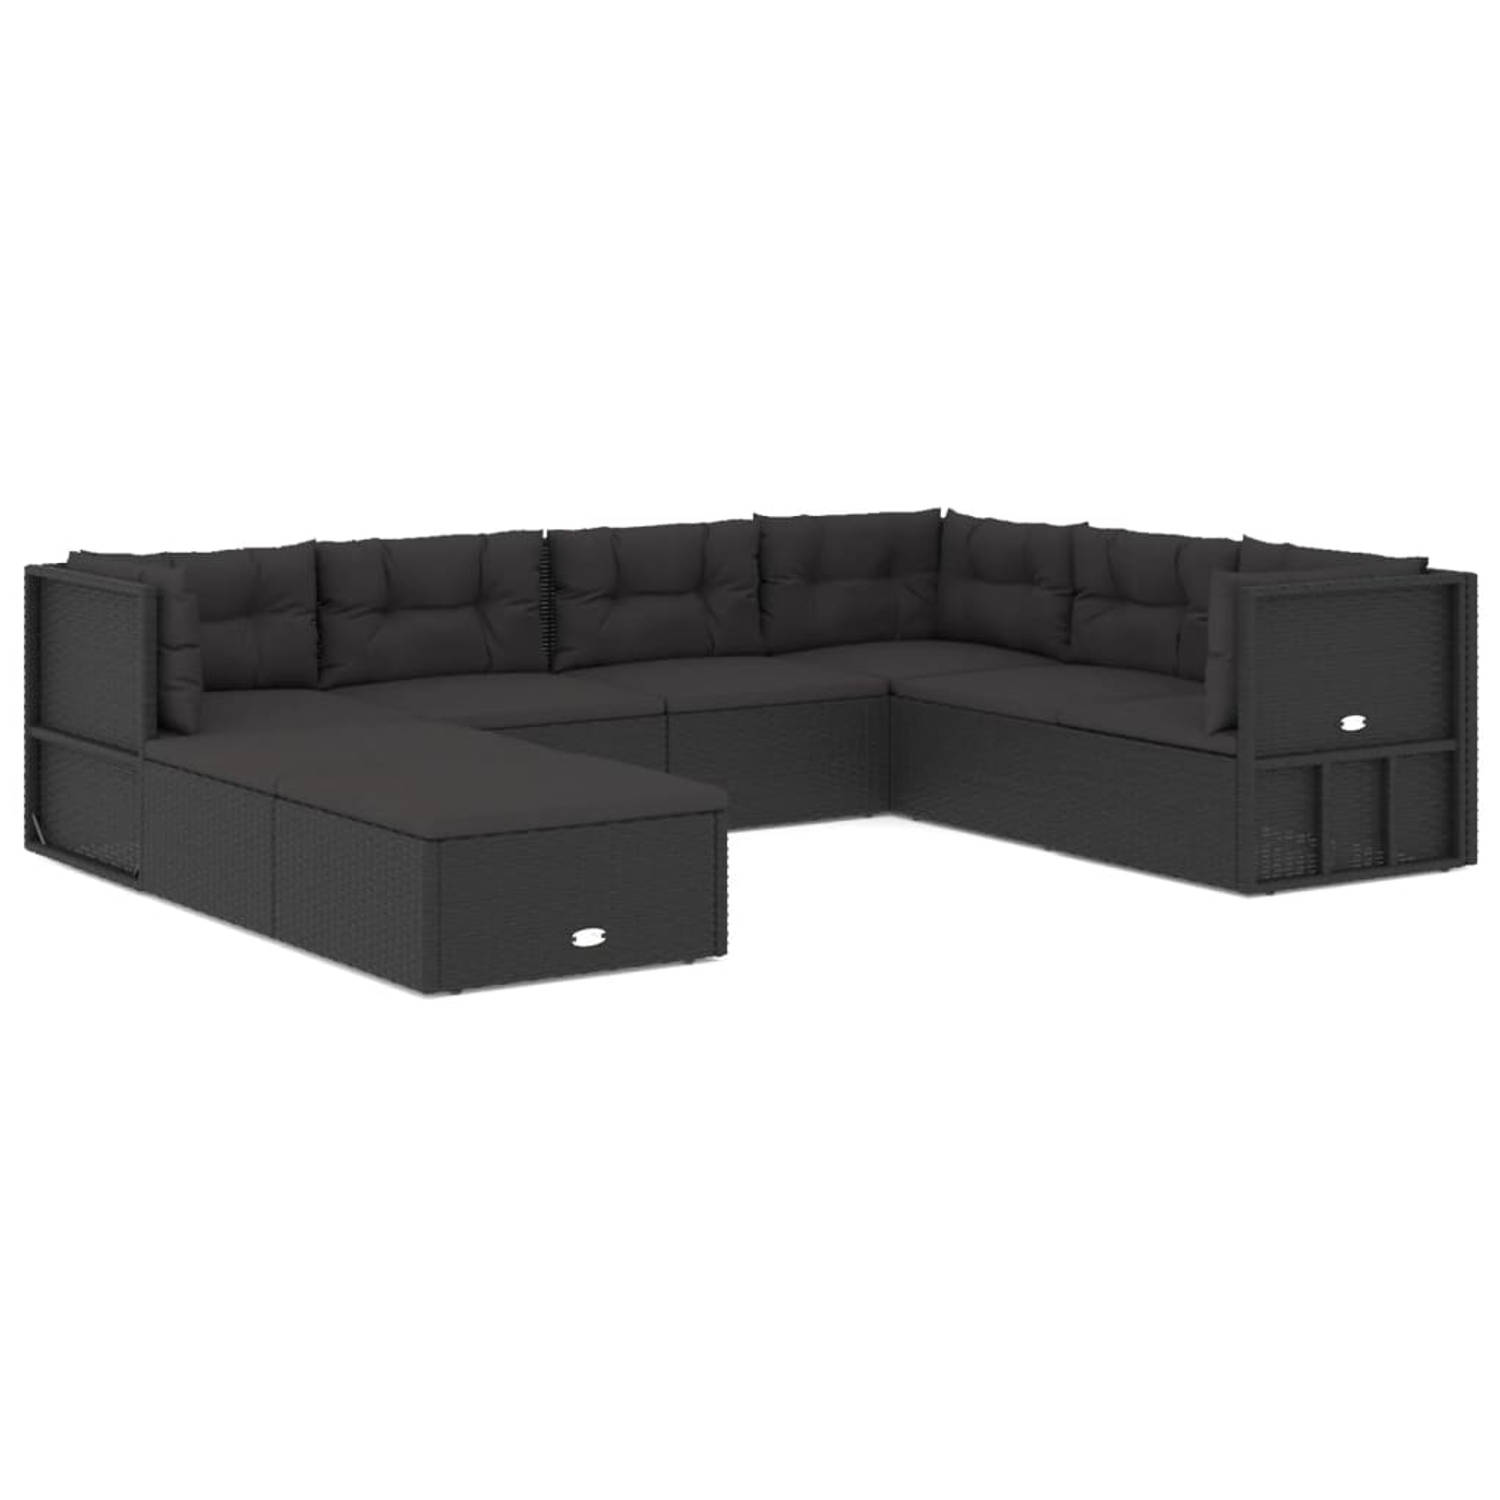 The Living Store Loungeset - Corner - Black PE Rattan - Adjustable Seat - Comfortable Cushions